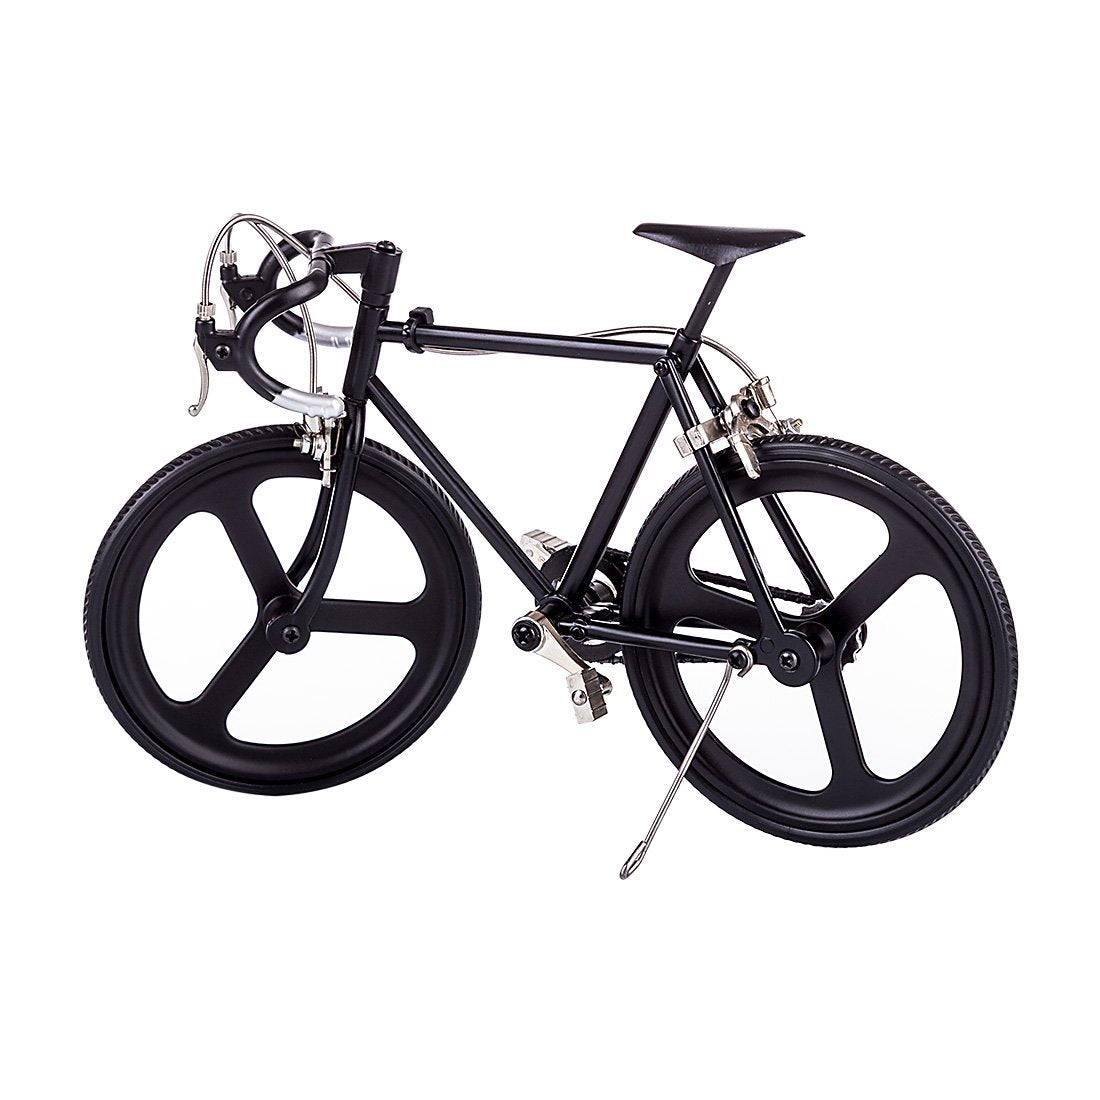 Metal DIY Racing Bike Cycling Bicycle Sports Assembly Model Kit